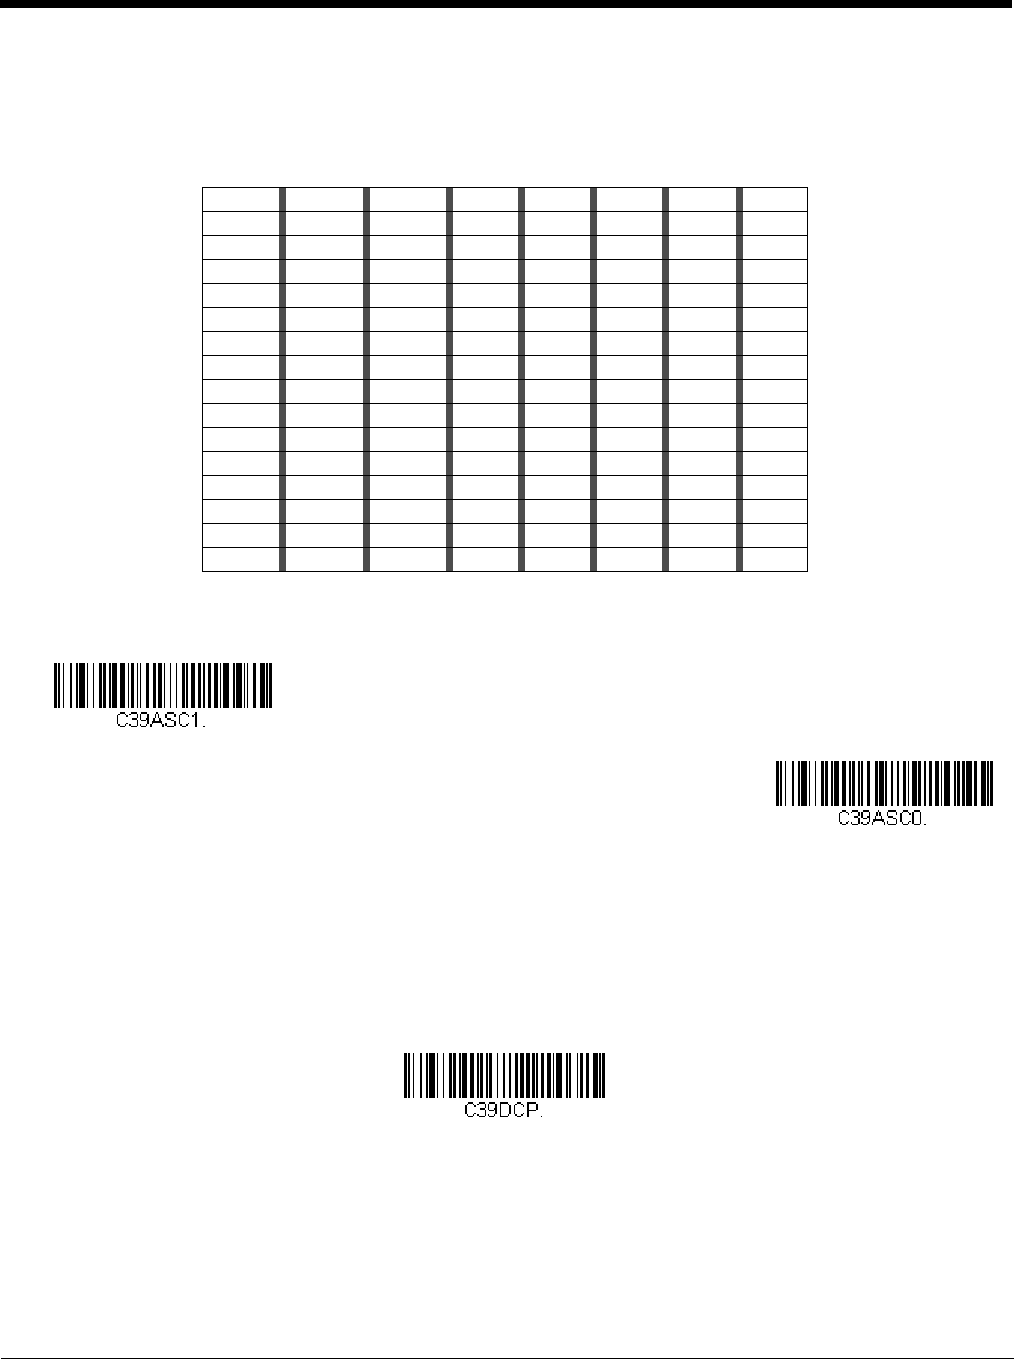 Honeywell 1981A Barcode Scanner User Manual 14C0587R 1981i 2 2015 02 10